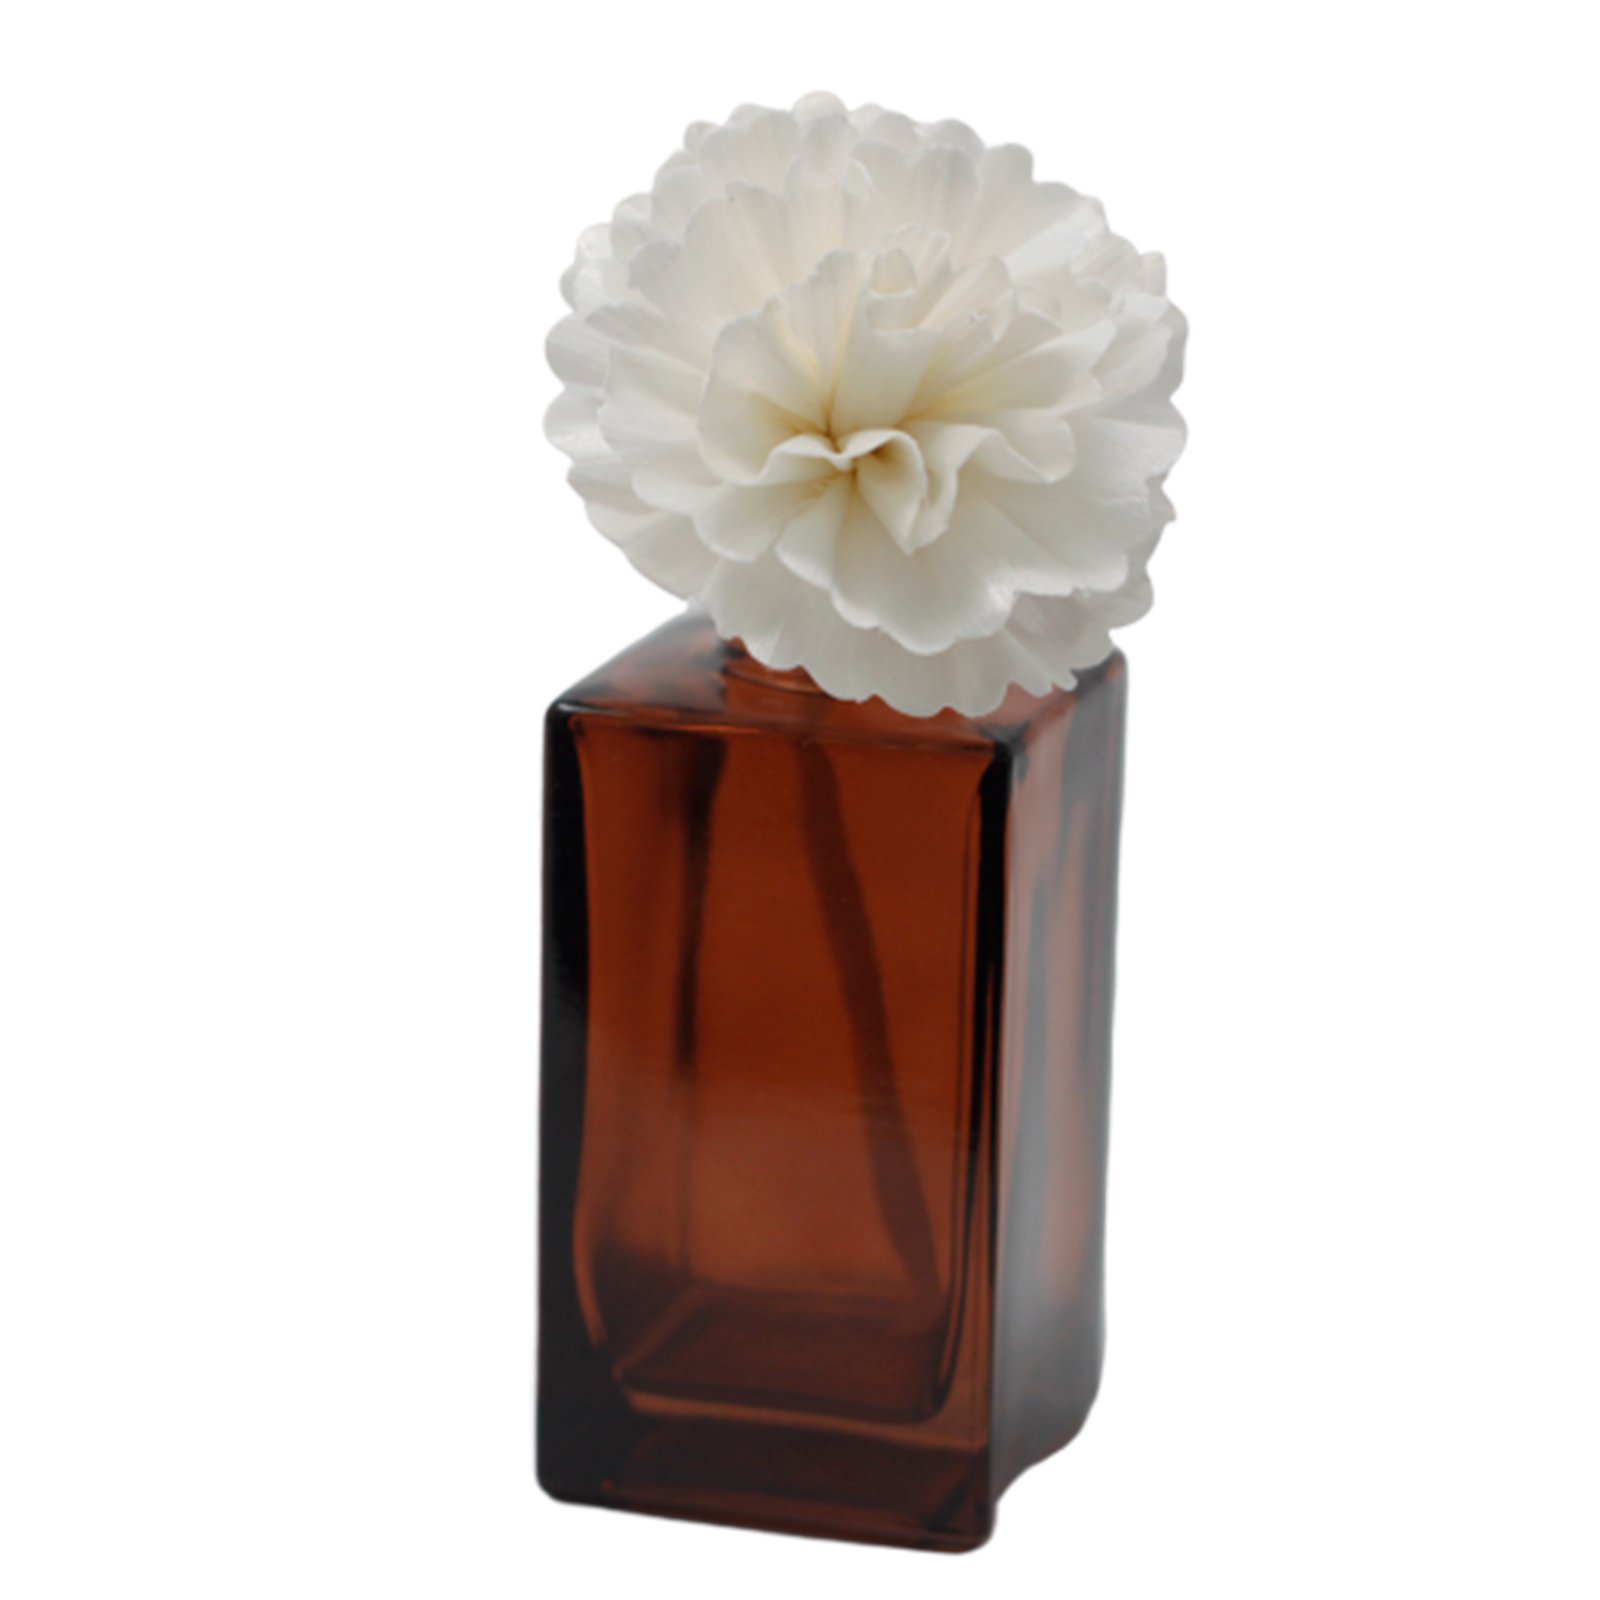 Natural Diffuser Flowers - Medium Carnation on String